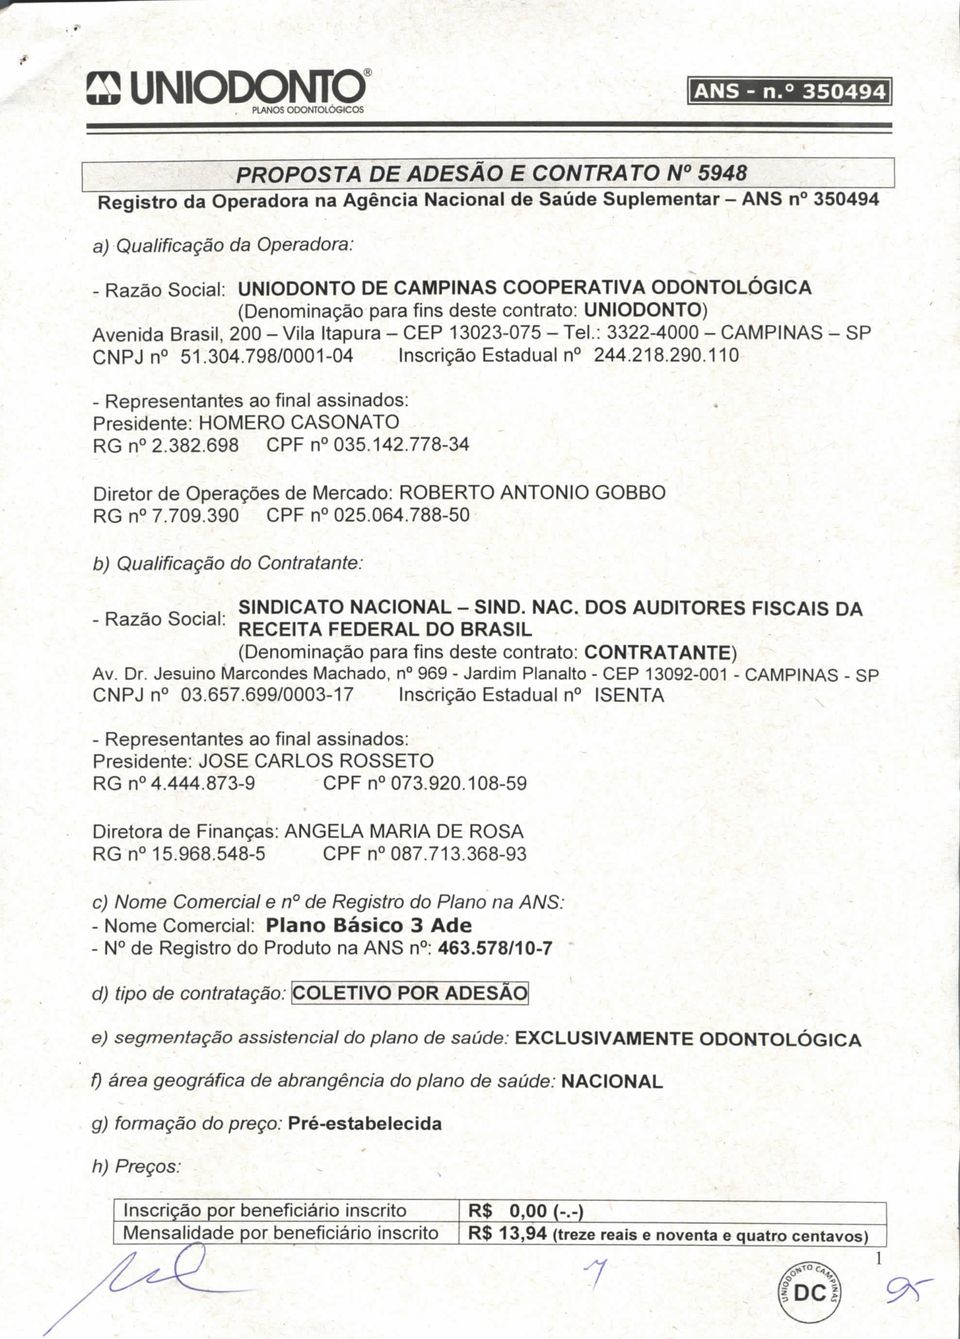 COOPERATIVA ODONTOLÓGICA (Denominação para fins deste contrato: UNIODONTO) Avenida Brasil, 200-Vila Itapura-CEP 13023-075-Tel.: 3322-4000 - CAMPINAS - SP CNPJ n 51.304.